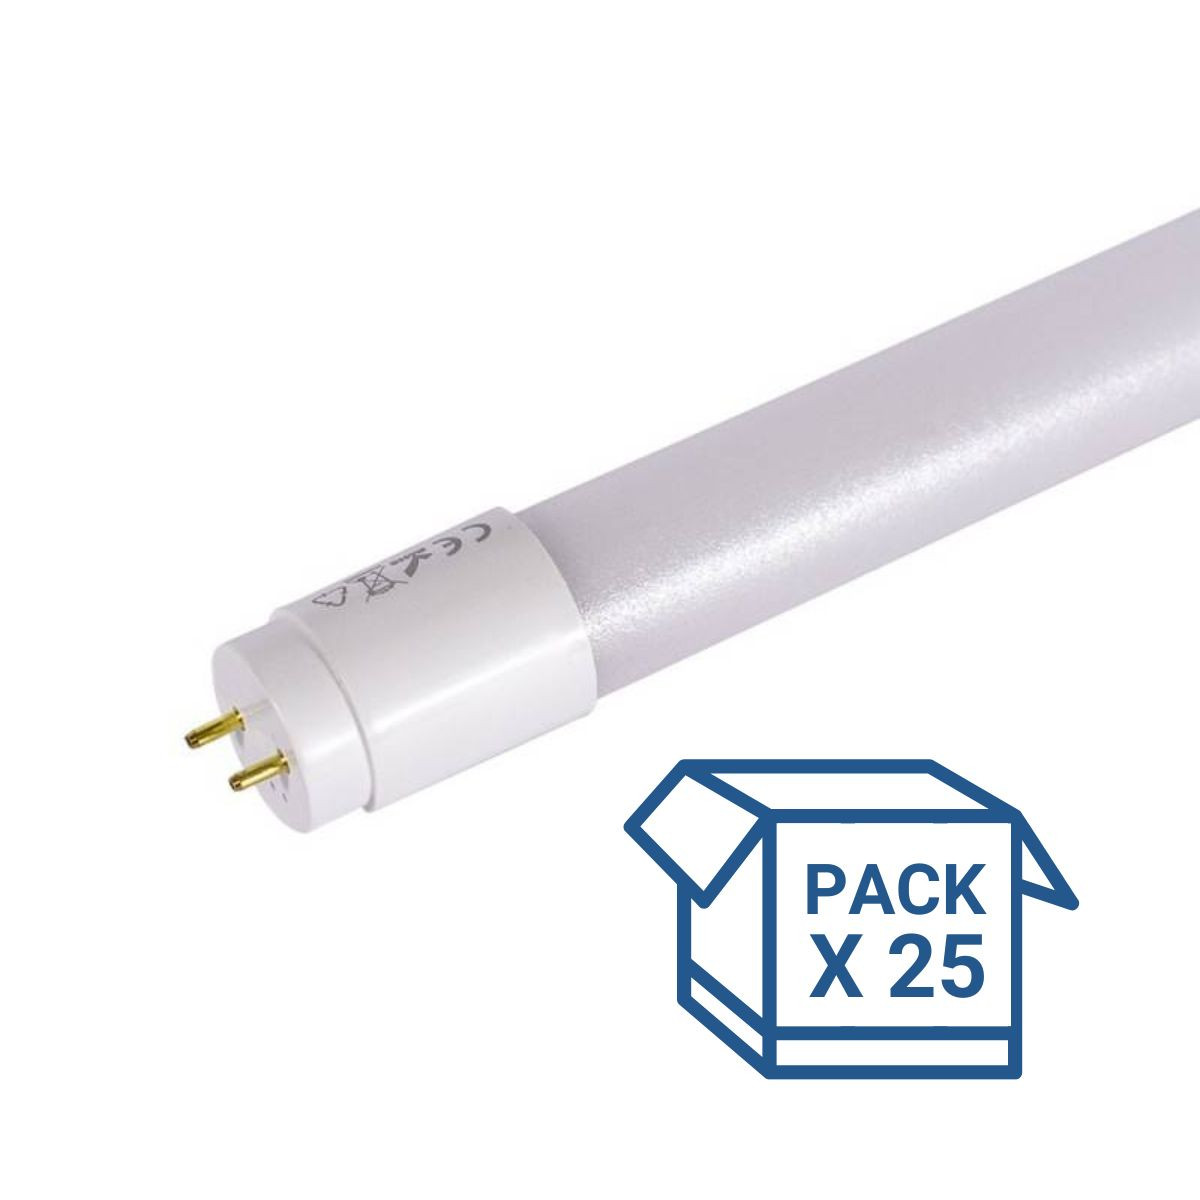 Pack x 25 - Tubos LED 120cm T8 - 18W - 140lm/W